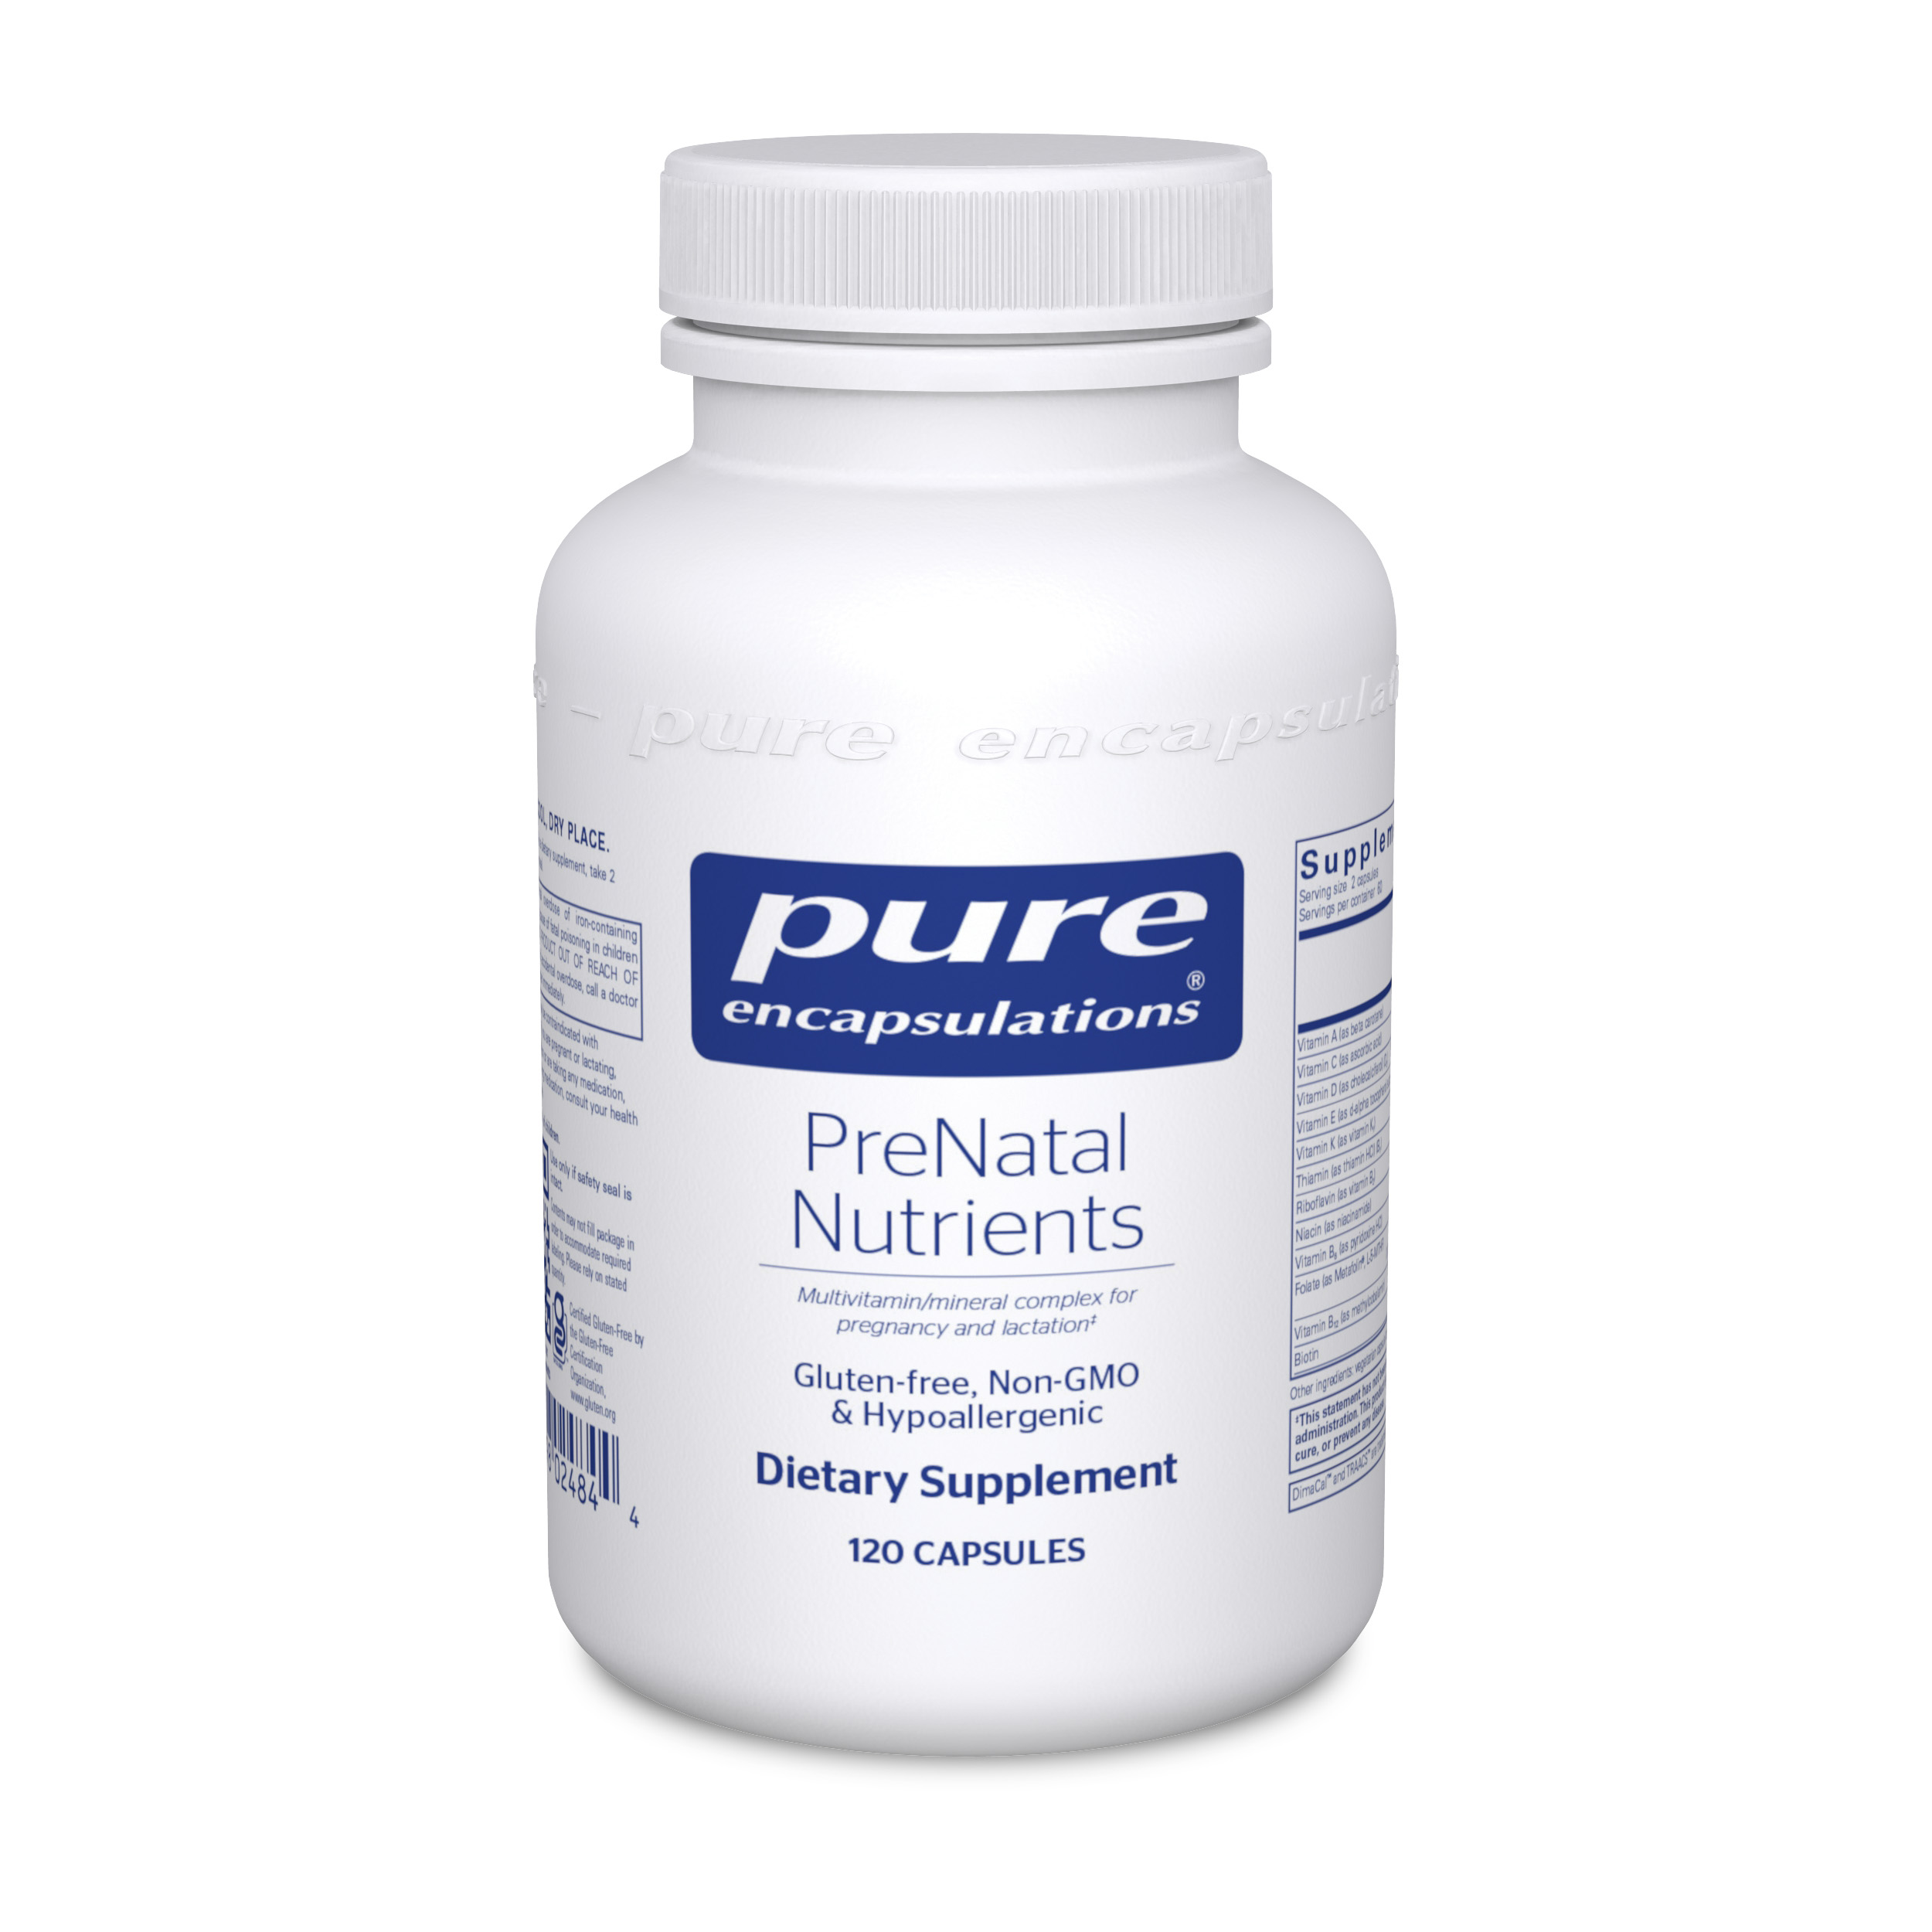 PreNatal Nutrients Bottle, 120 capsules